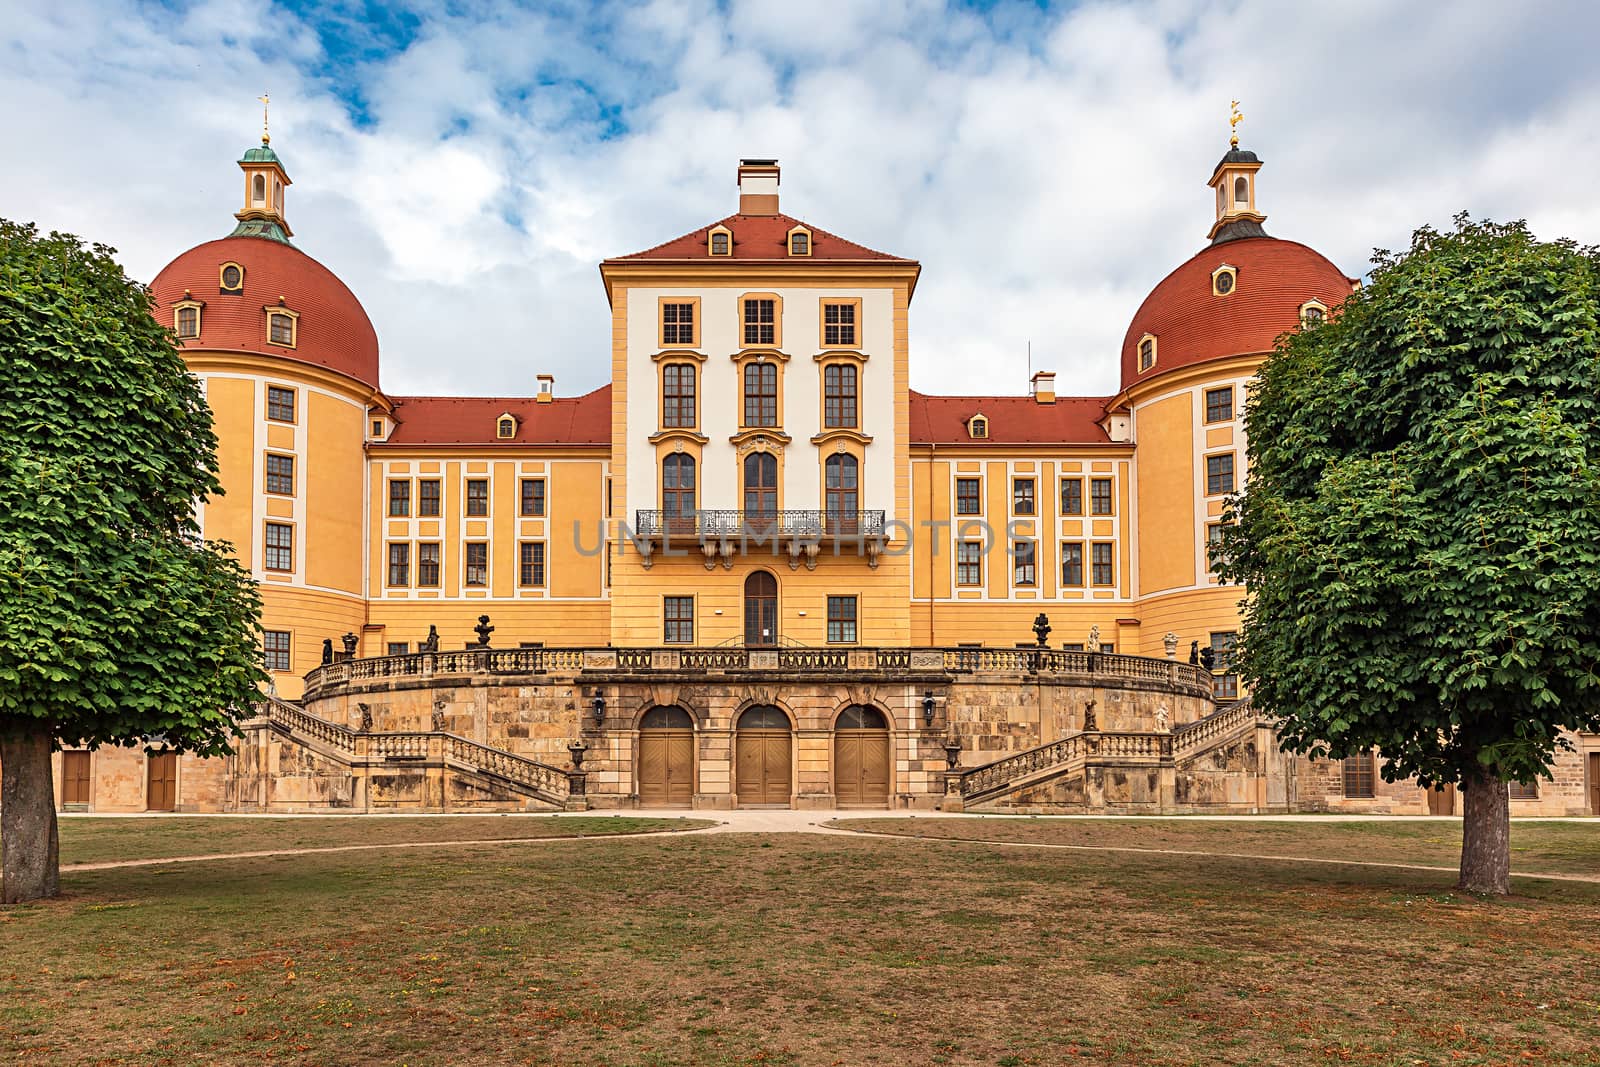 Baroque castle Moritzburg Castle, Moritzburg, near Dresden, Saxony, Germany.